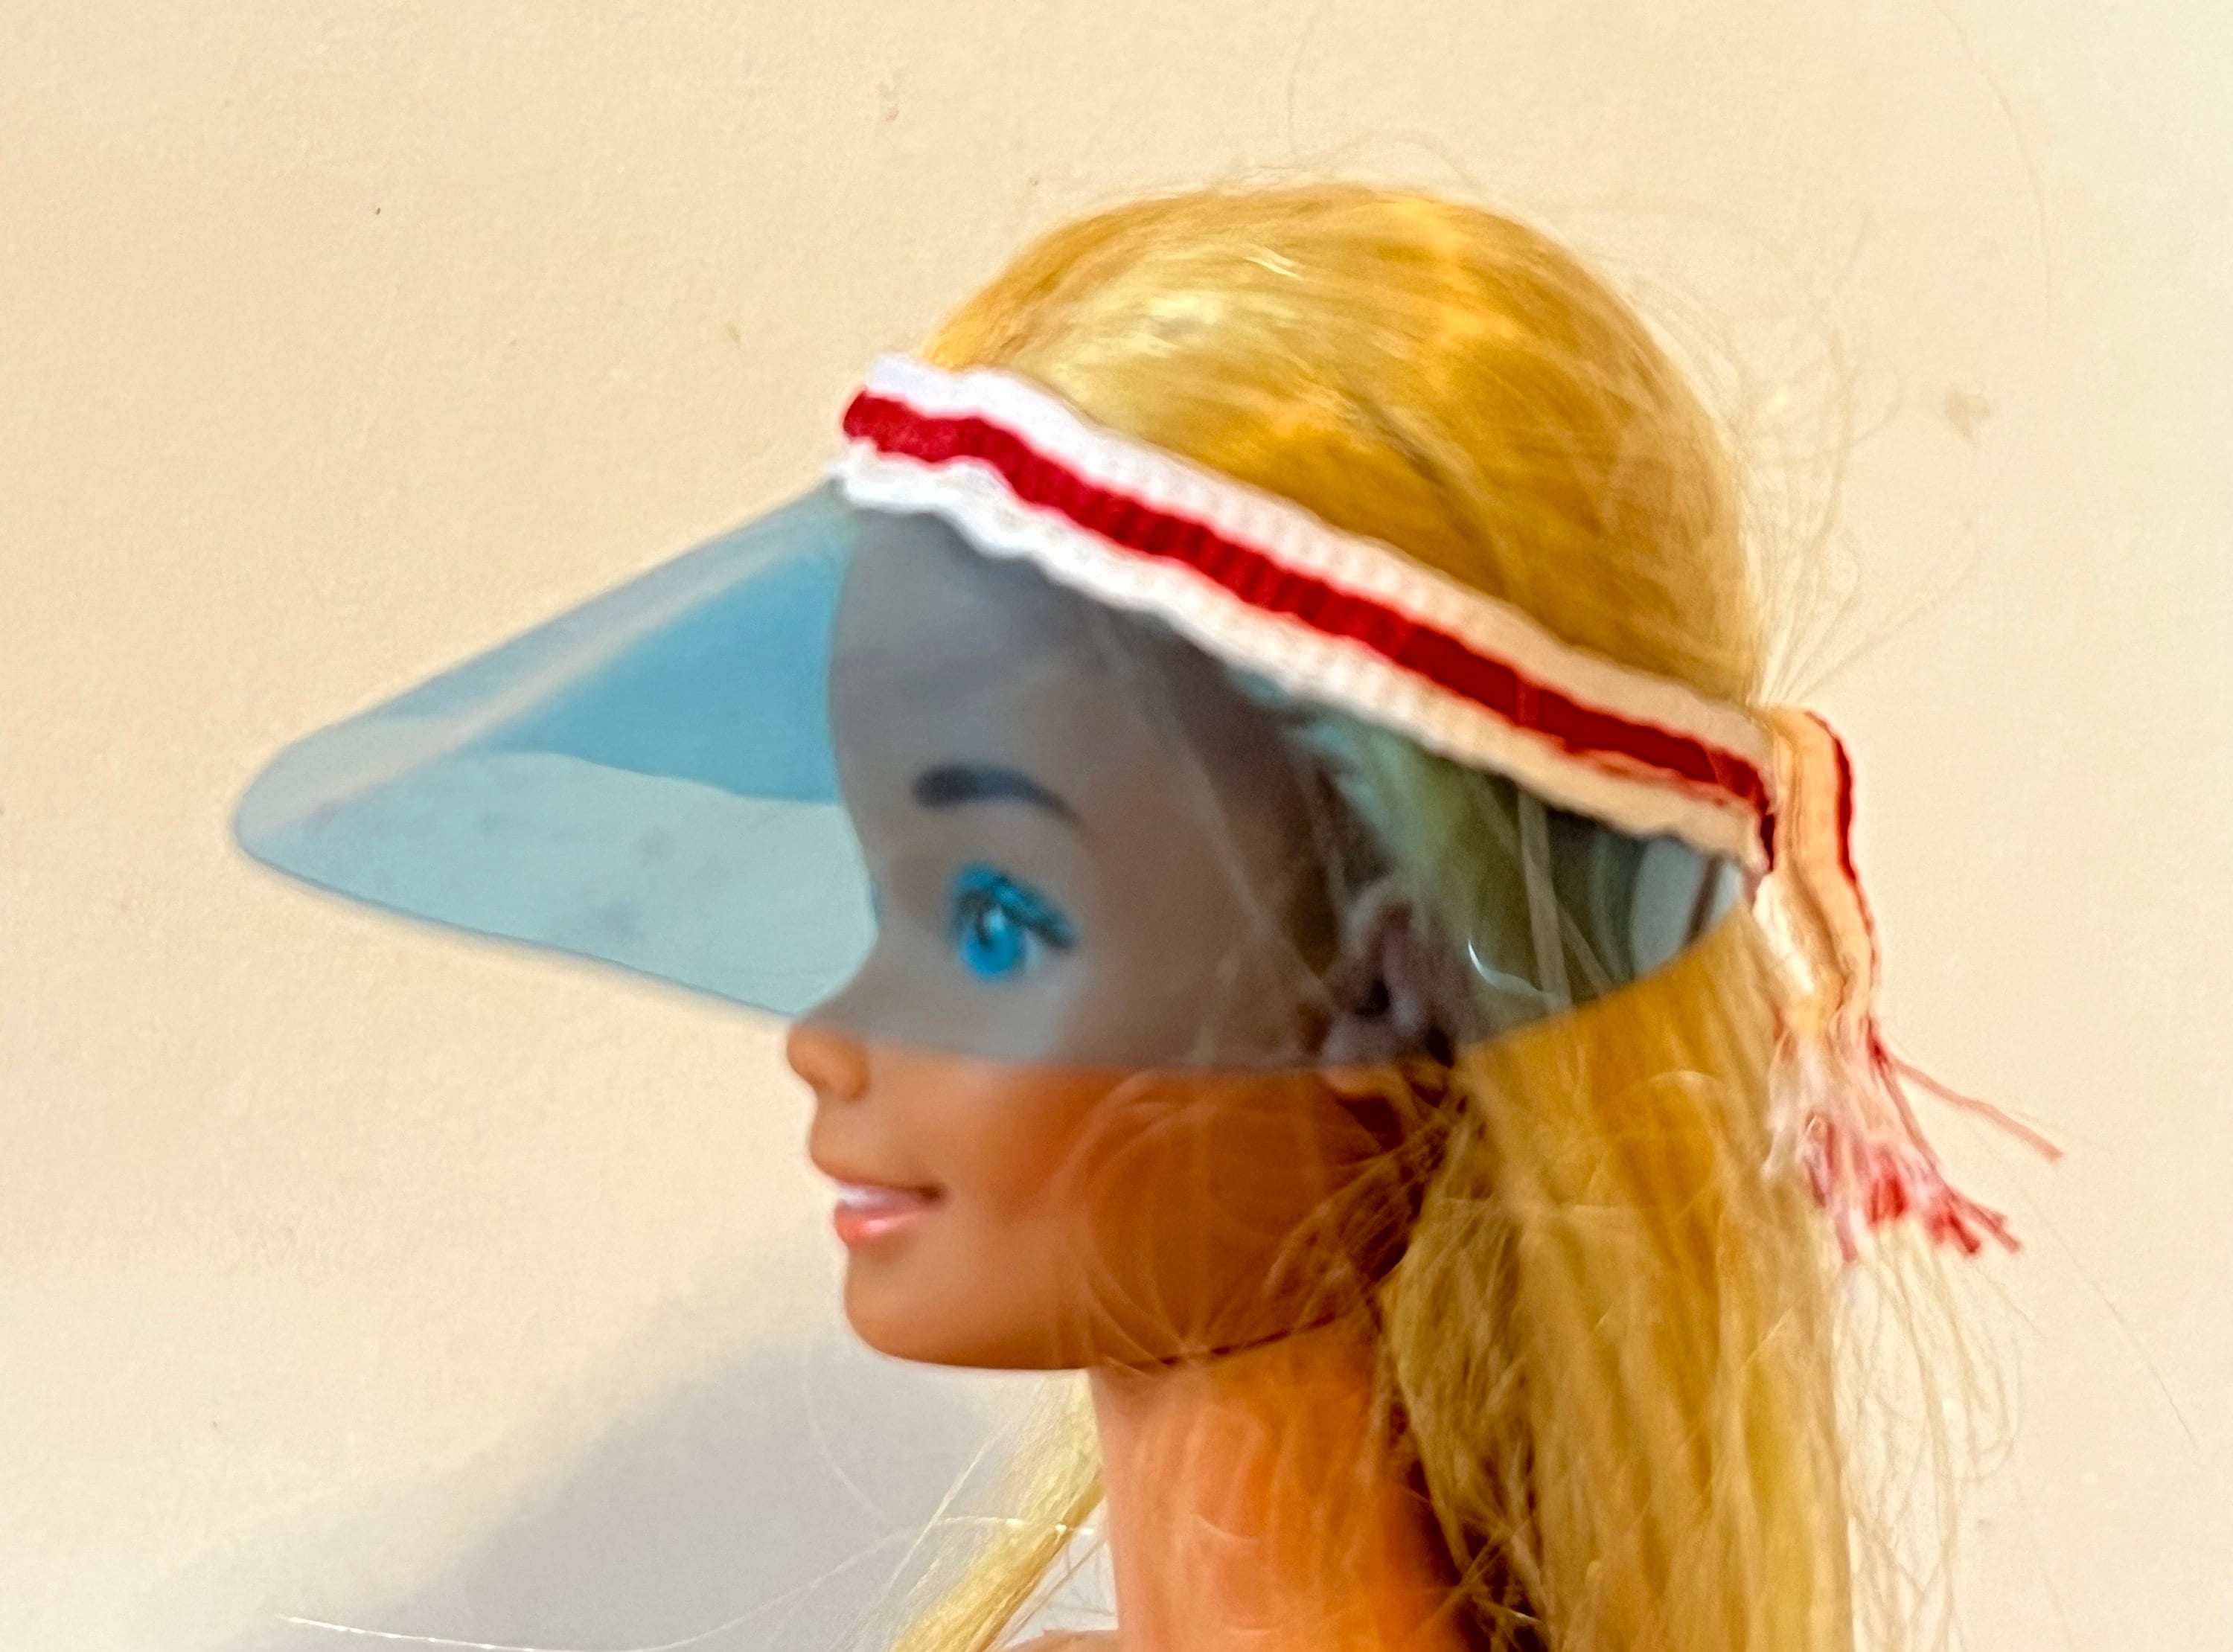 Vintage Barbie Clothes - Sparkle Beach and Sleep 'N Fun - In Original  Packaging - Set of 2 (#DL650)